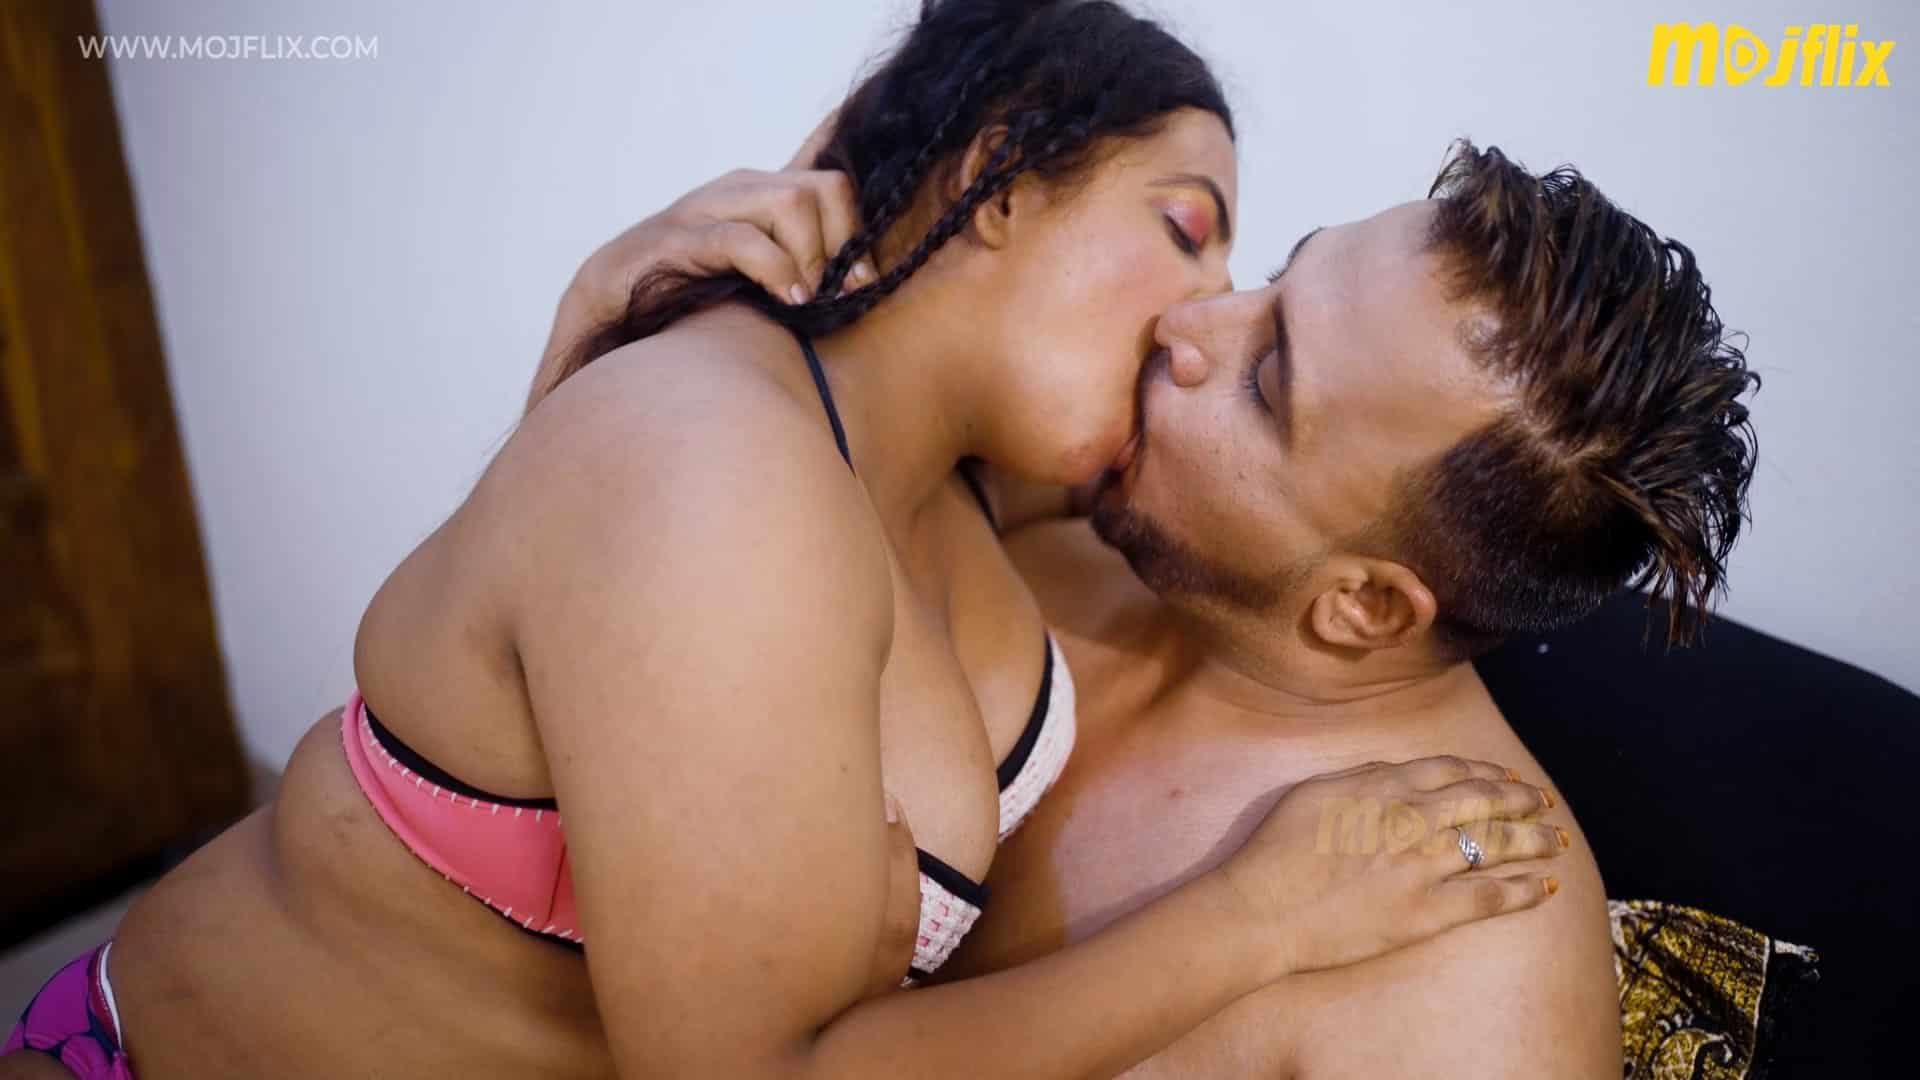 Sex Videos With Full Masti - pool masti 3 mojflix sex video - XNXX TV